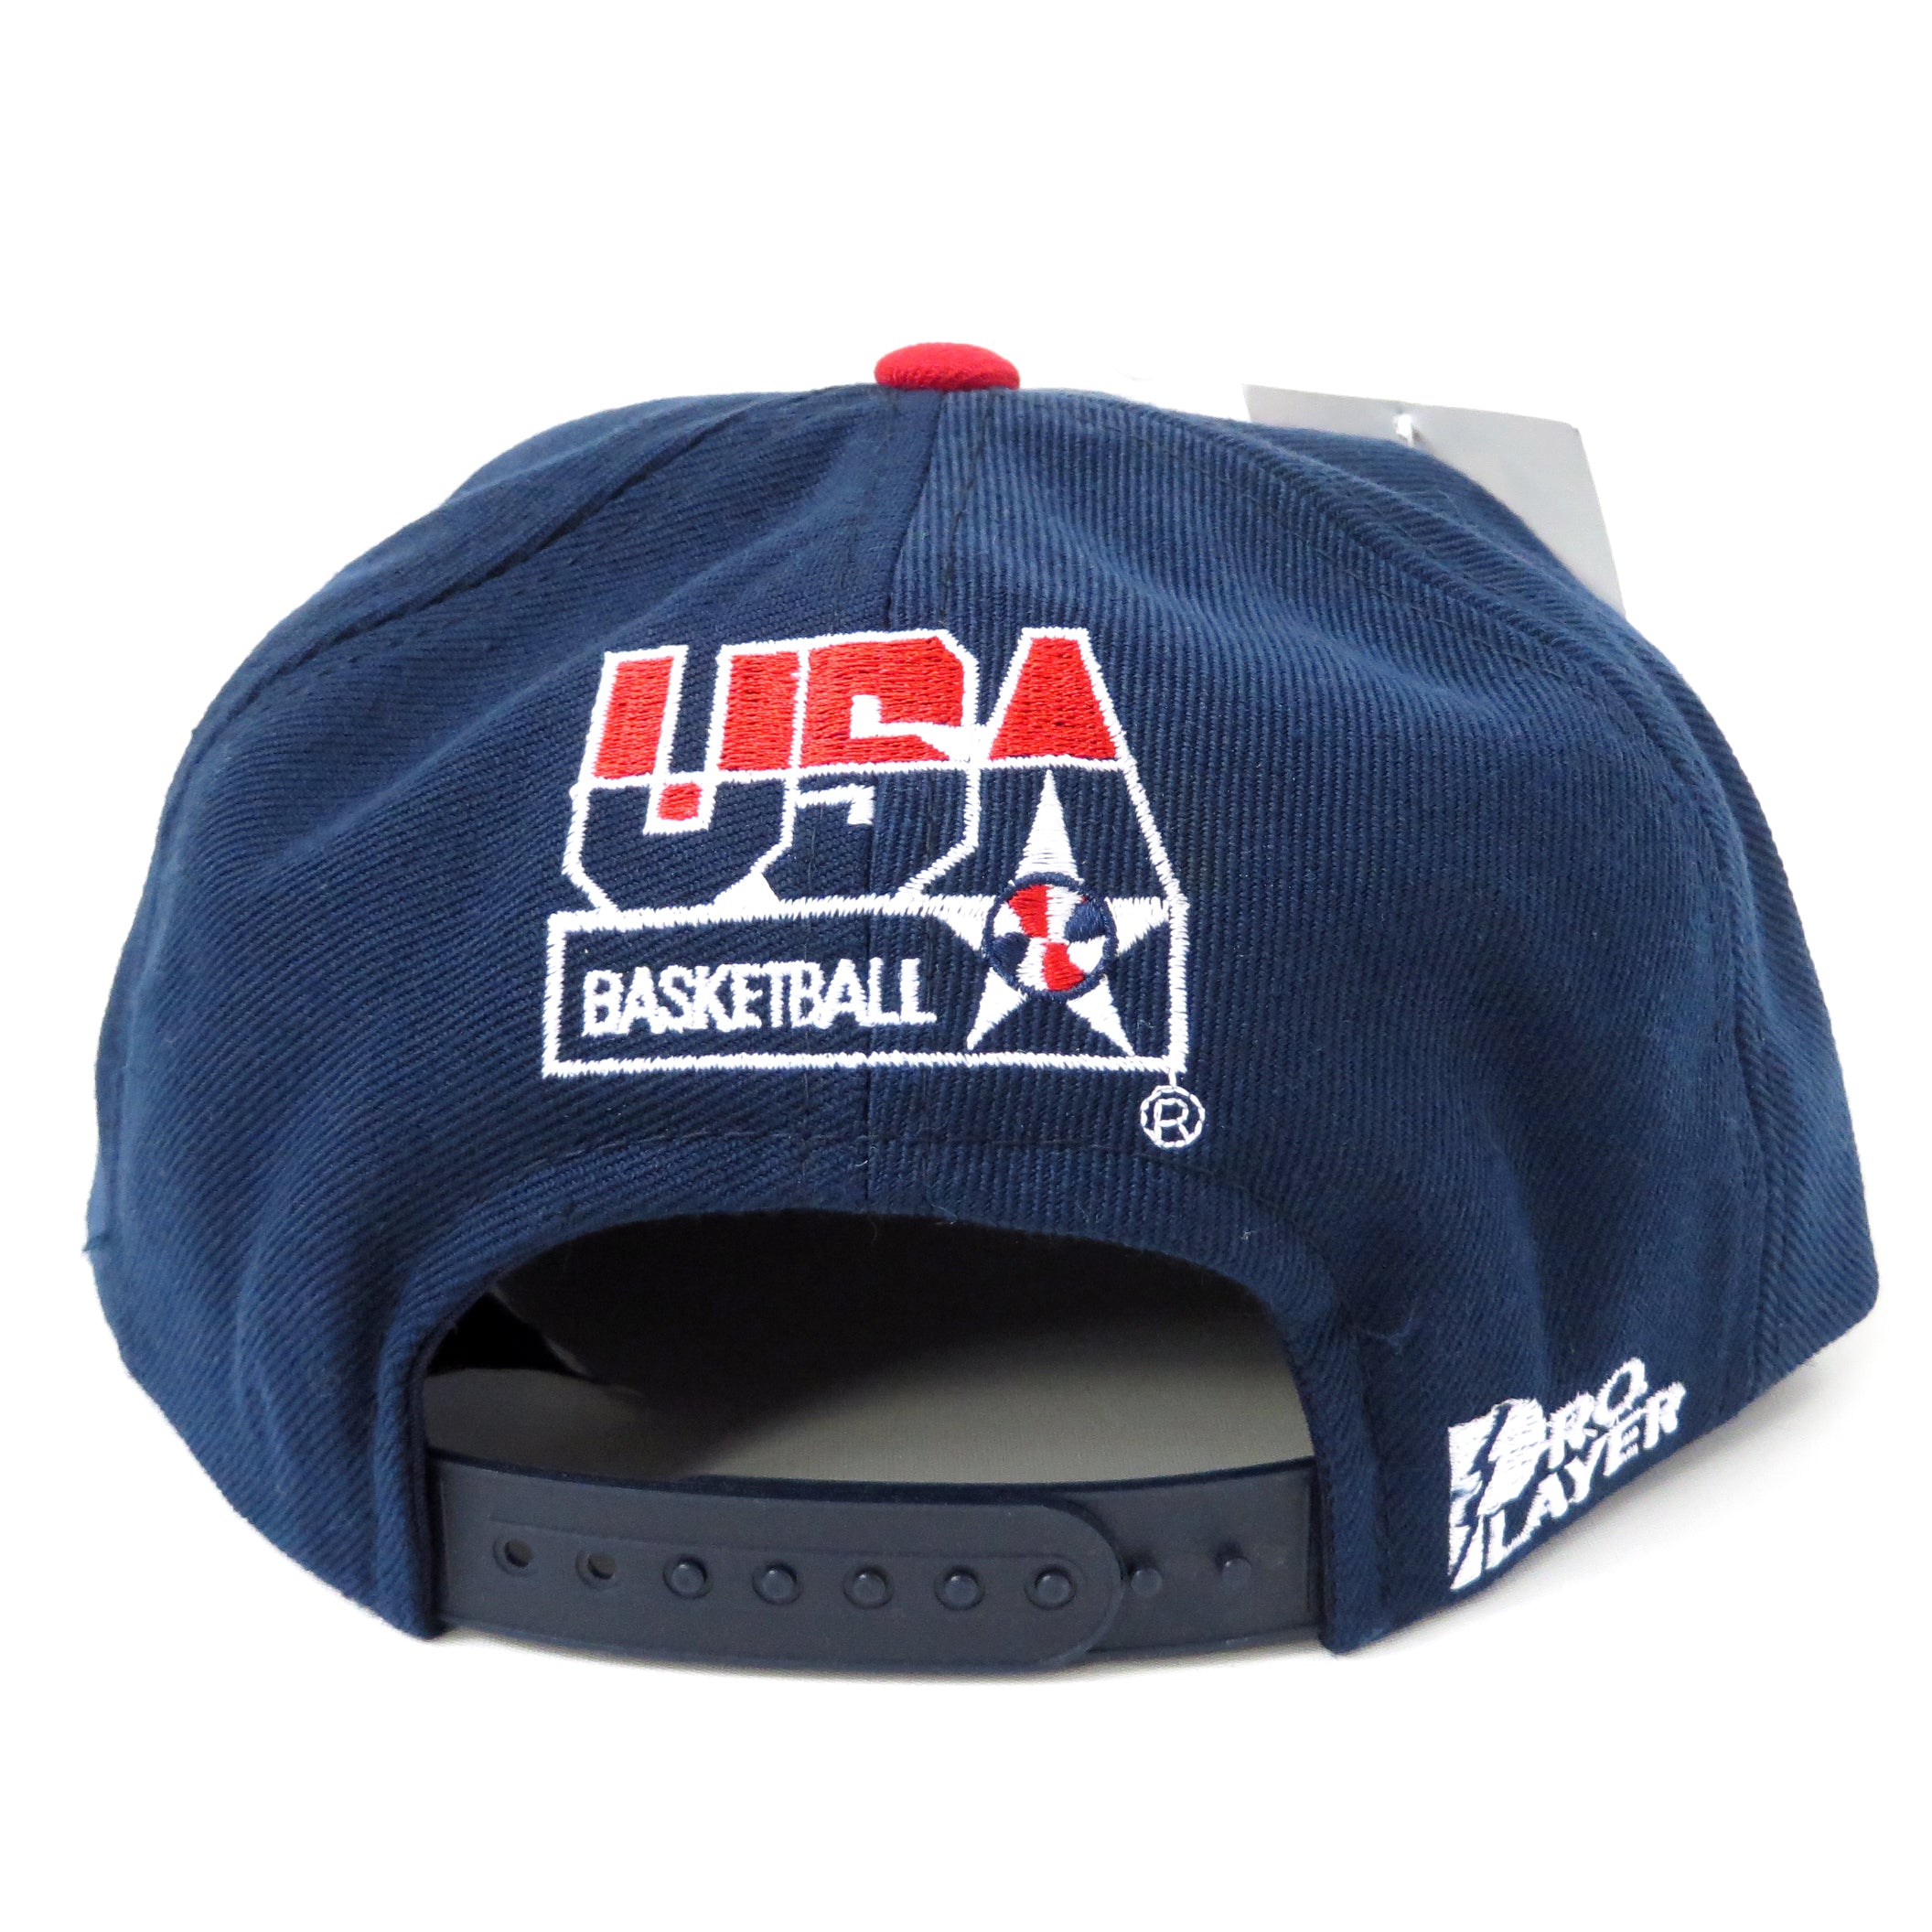 Vintage 1992 USA Basketball Snapback Hat